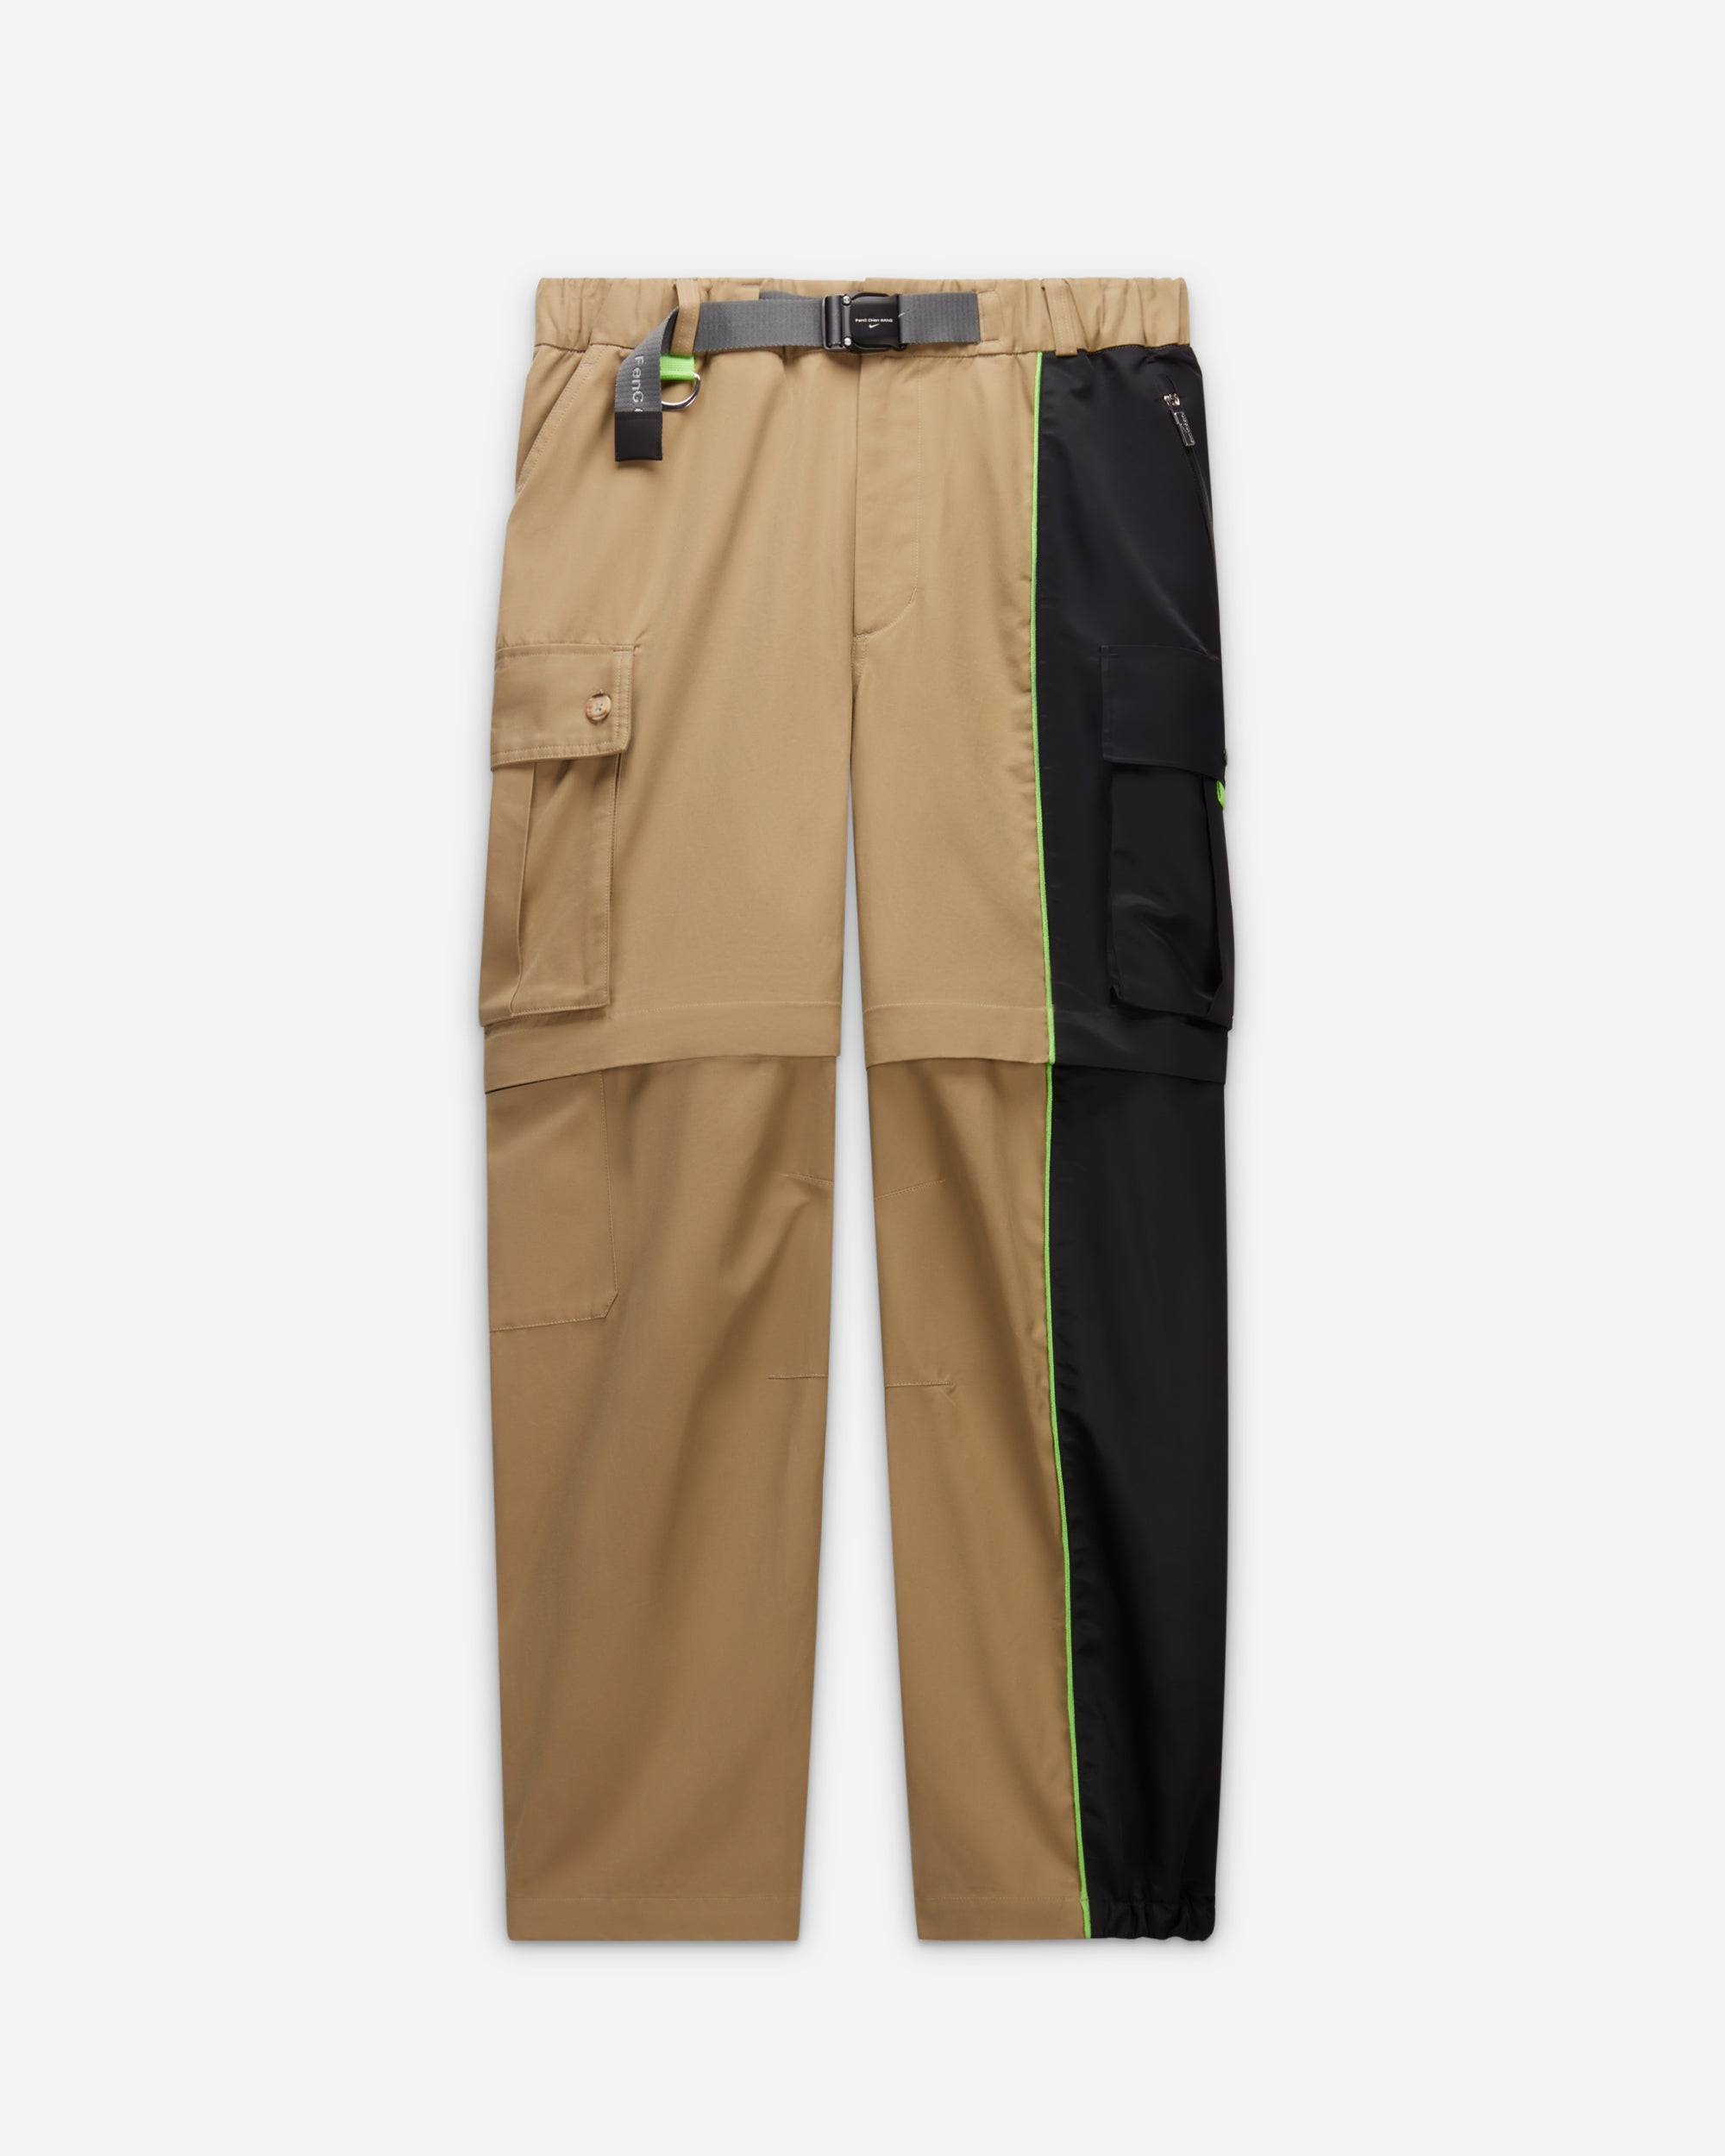 Nike Nike x Feng Chen Wang Cargo Pants KHAKI/BLACK DV4004-255